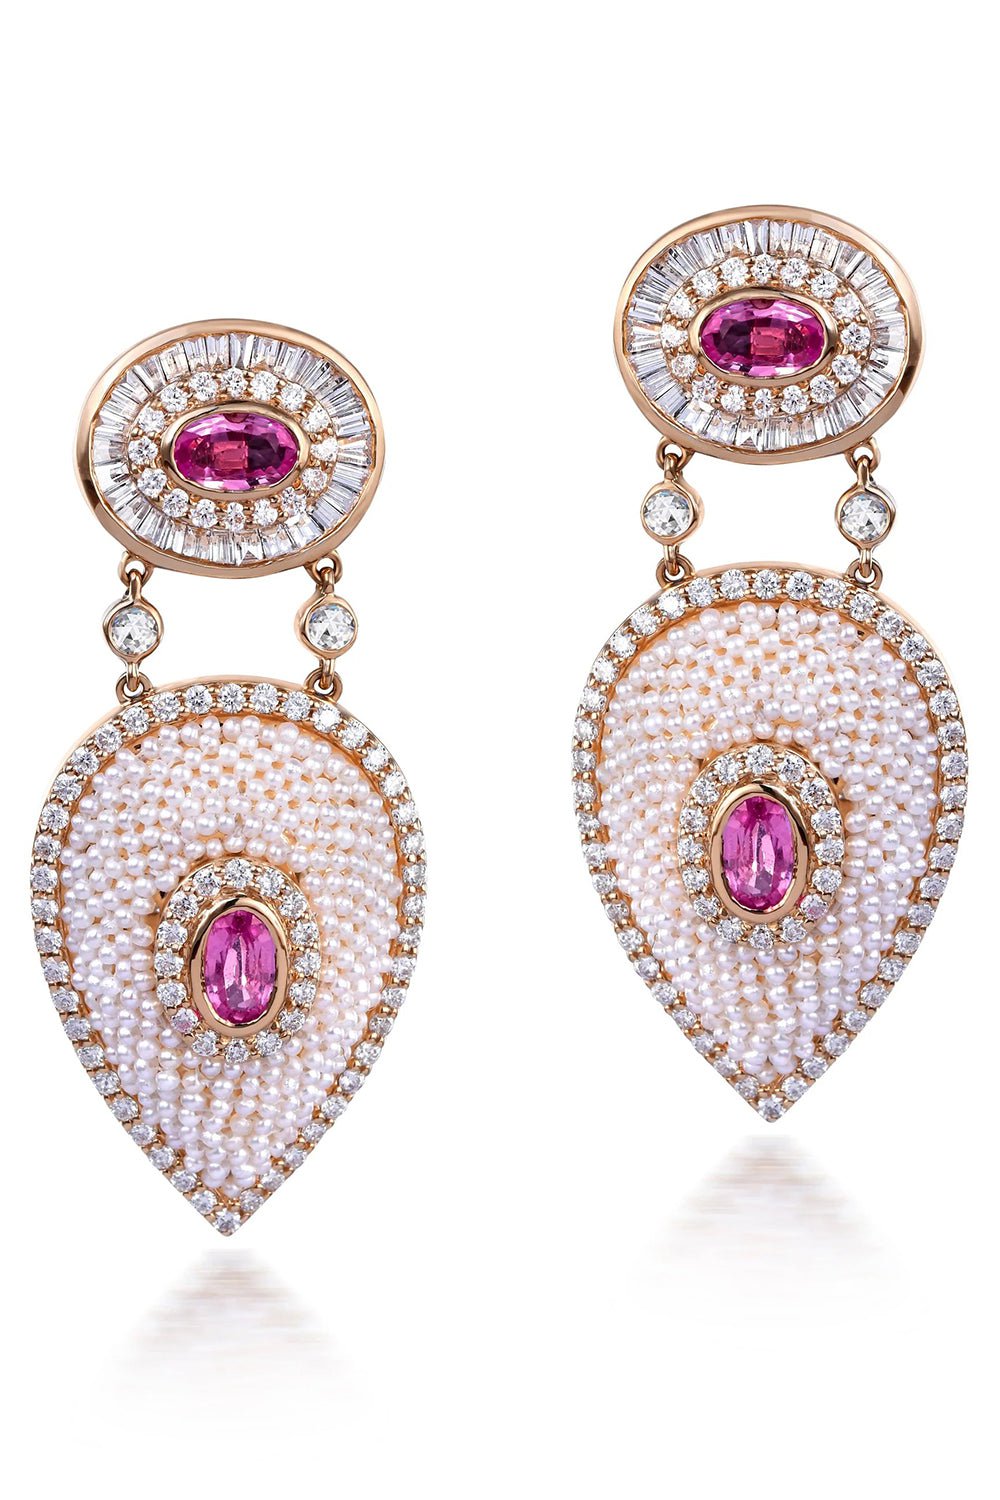 MOKSH-Bombay Keshi Pearl and Pink Sapphire Earrings-YELLOW GOLD